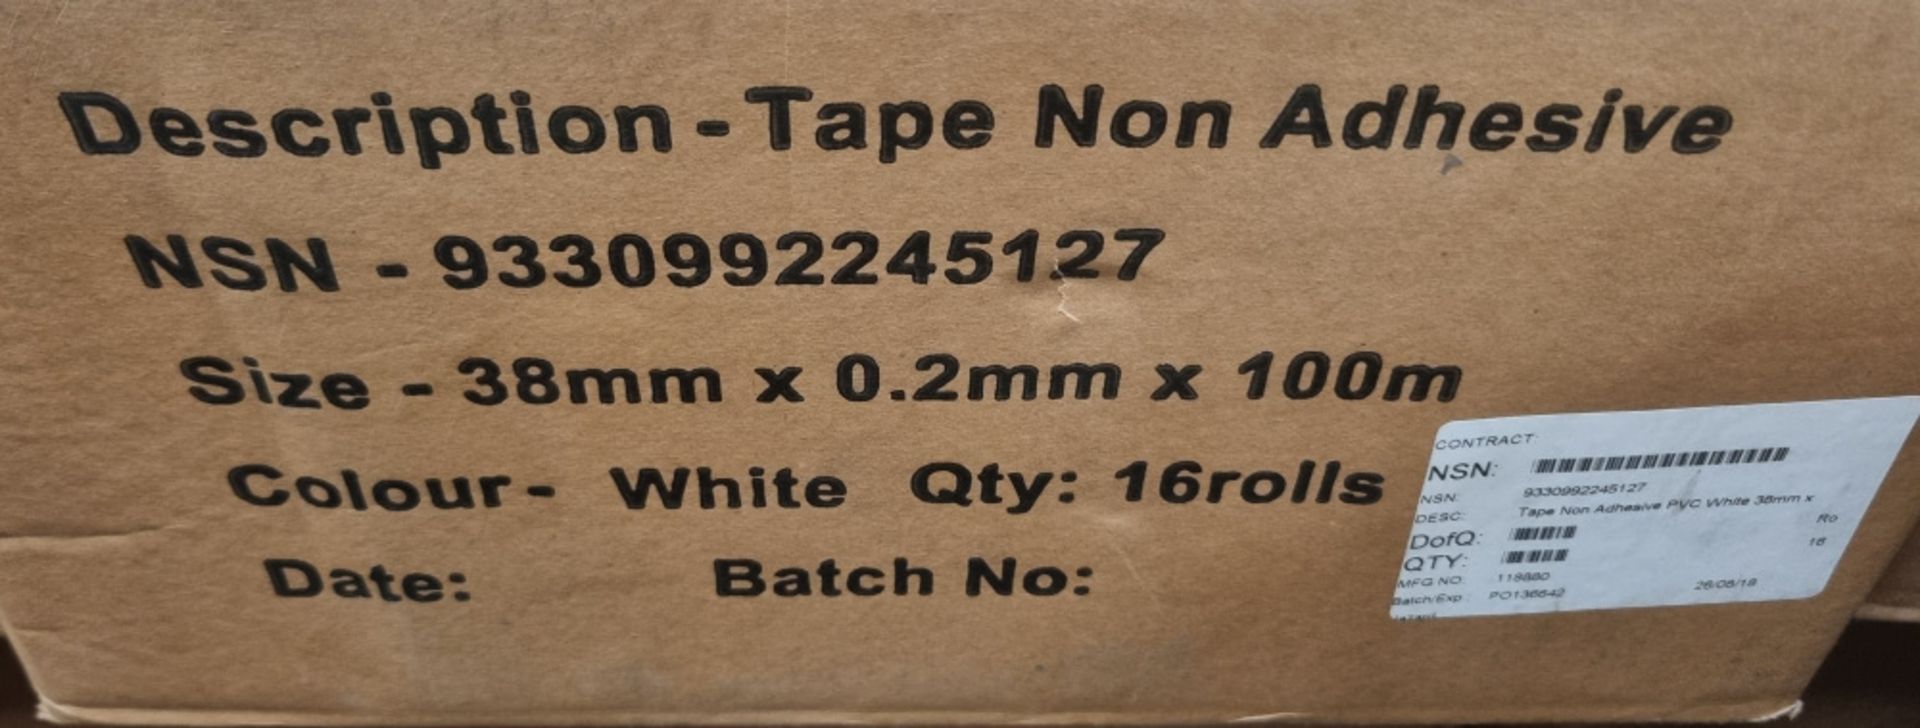 PVC White Non Adhesive Tape - 38mm x 0.2 x 100m - 16 rolls per box - 27 boxes - Image 4 of 5